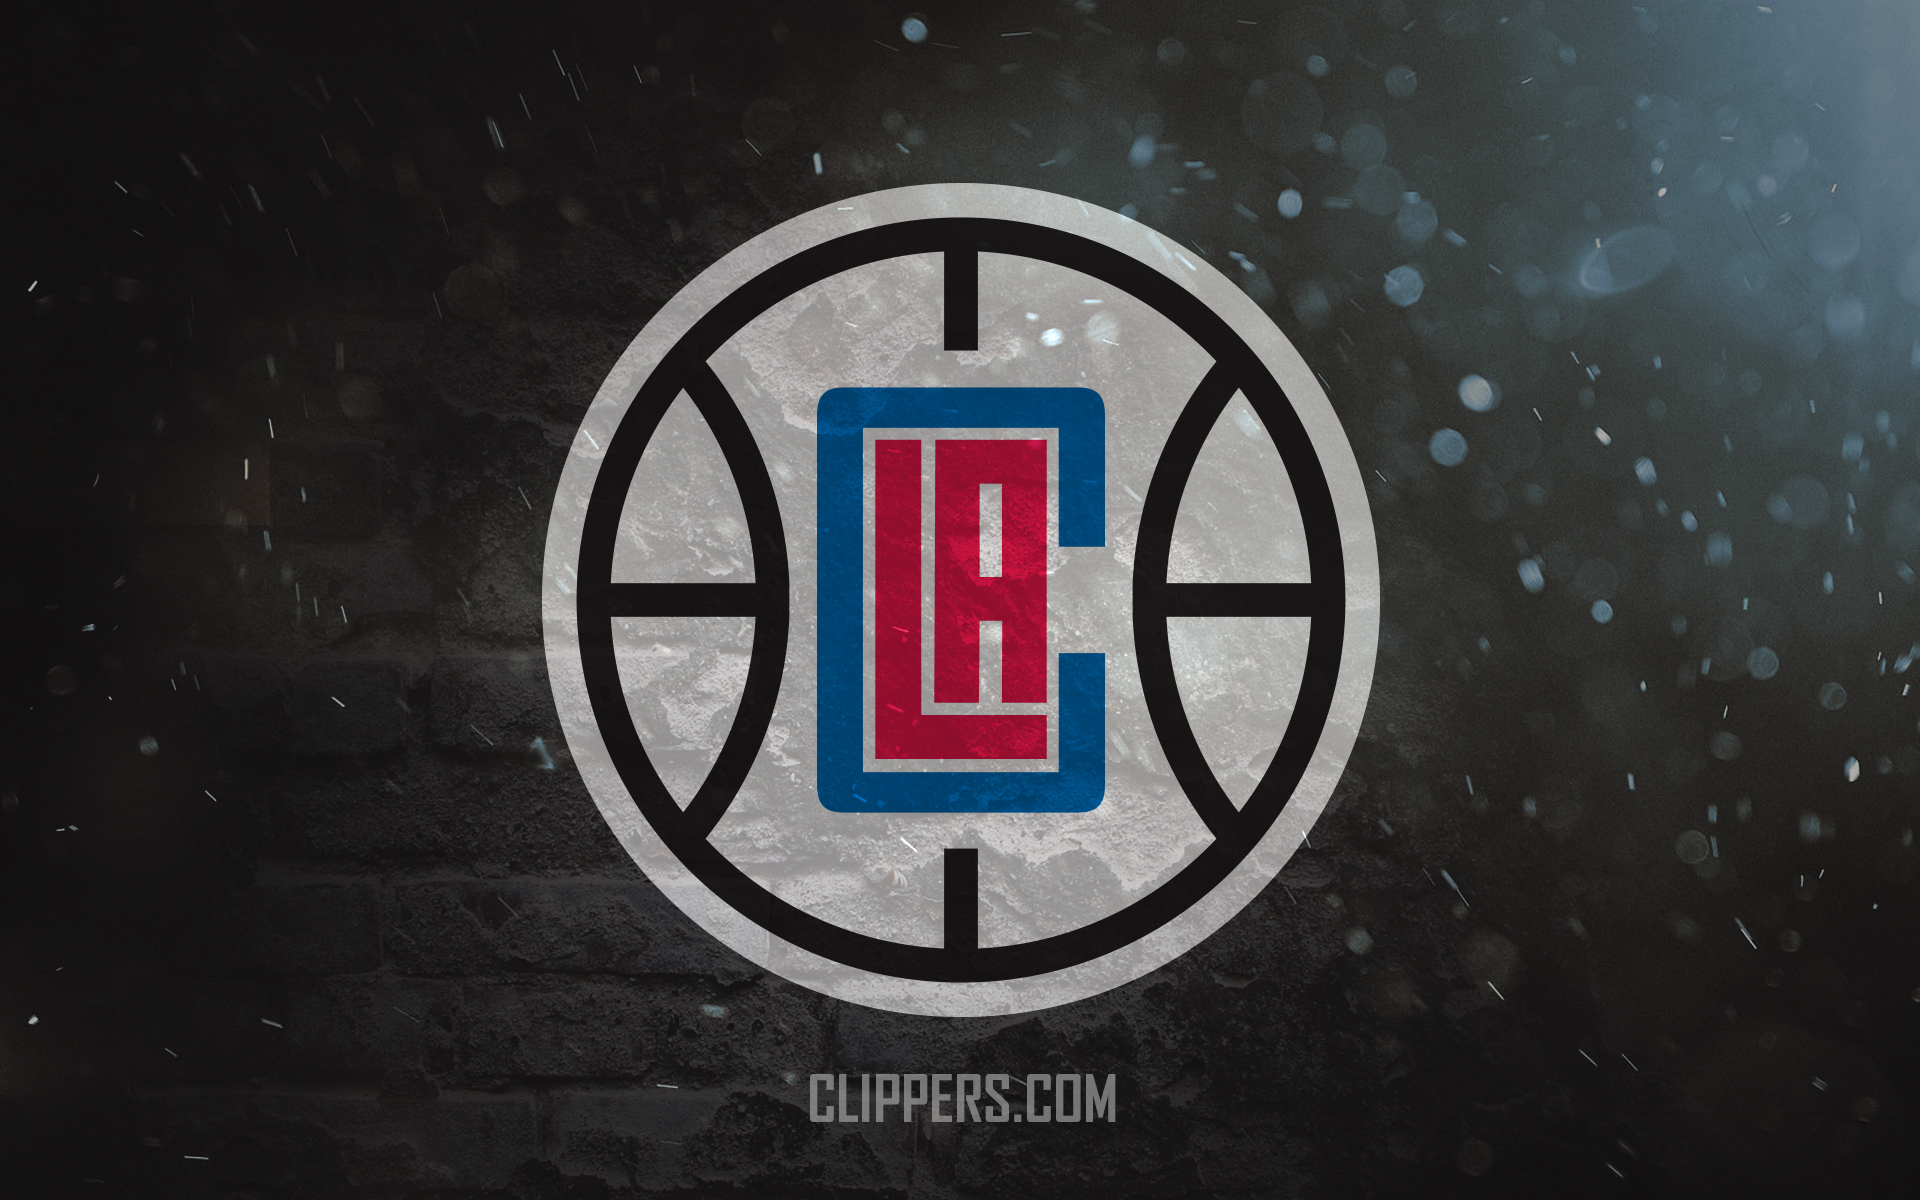 Claim Your Court La Clippers